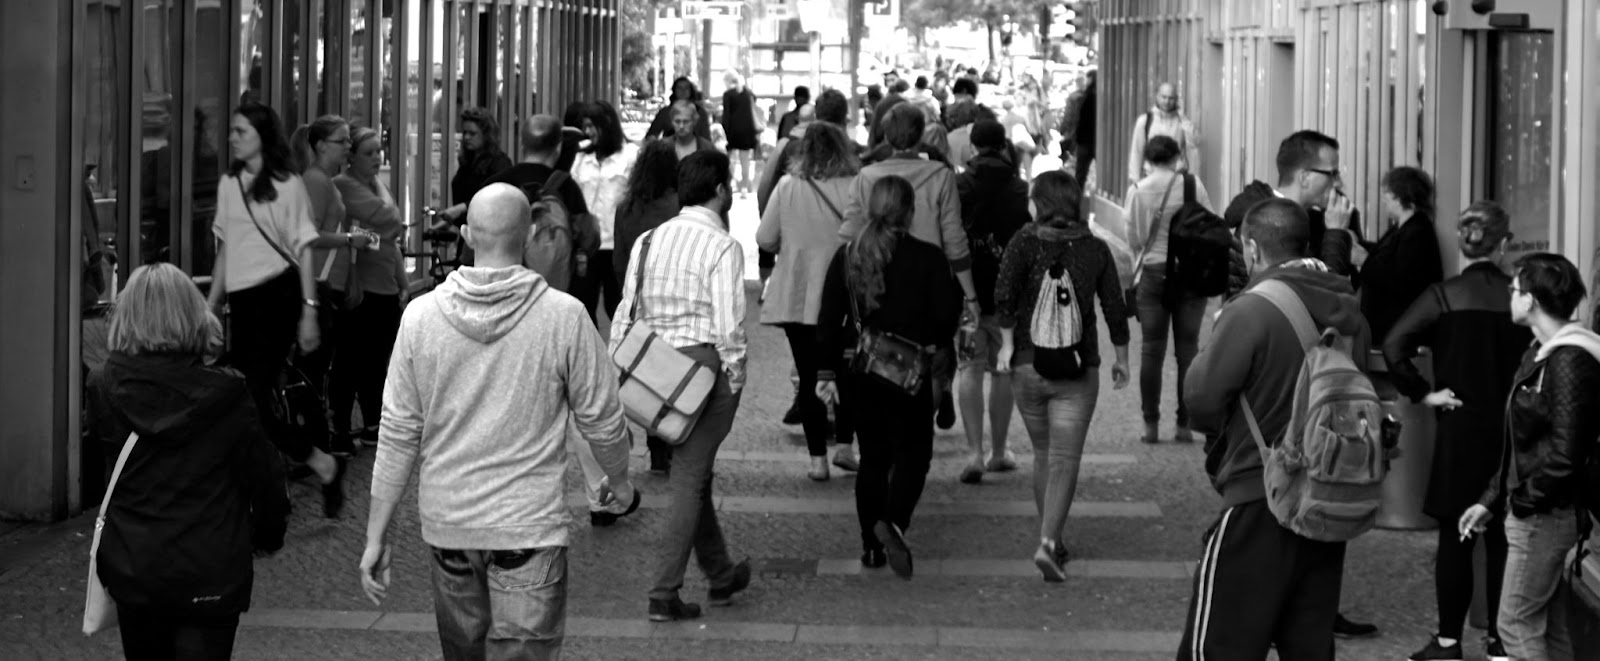 crowd of people walking on a street